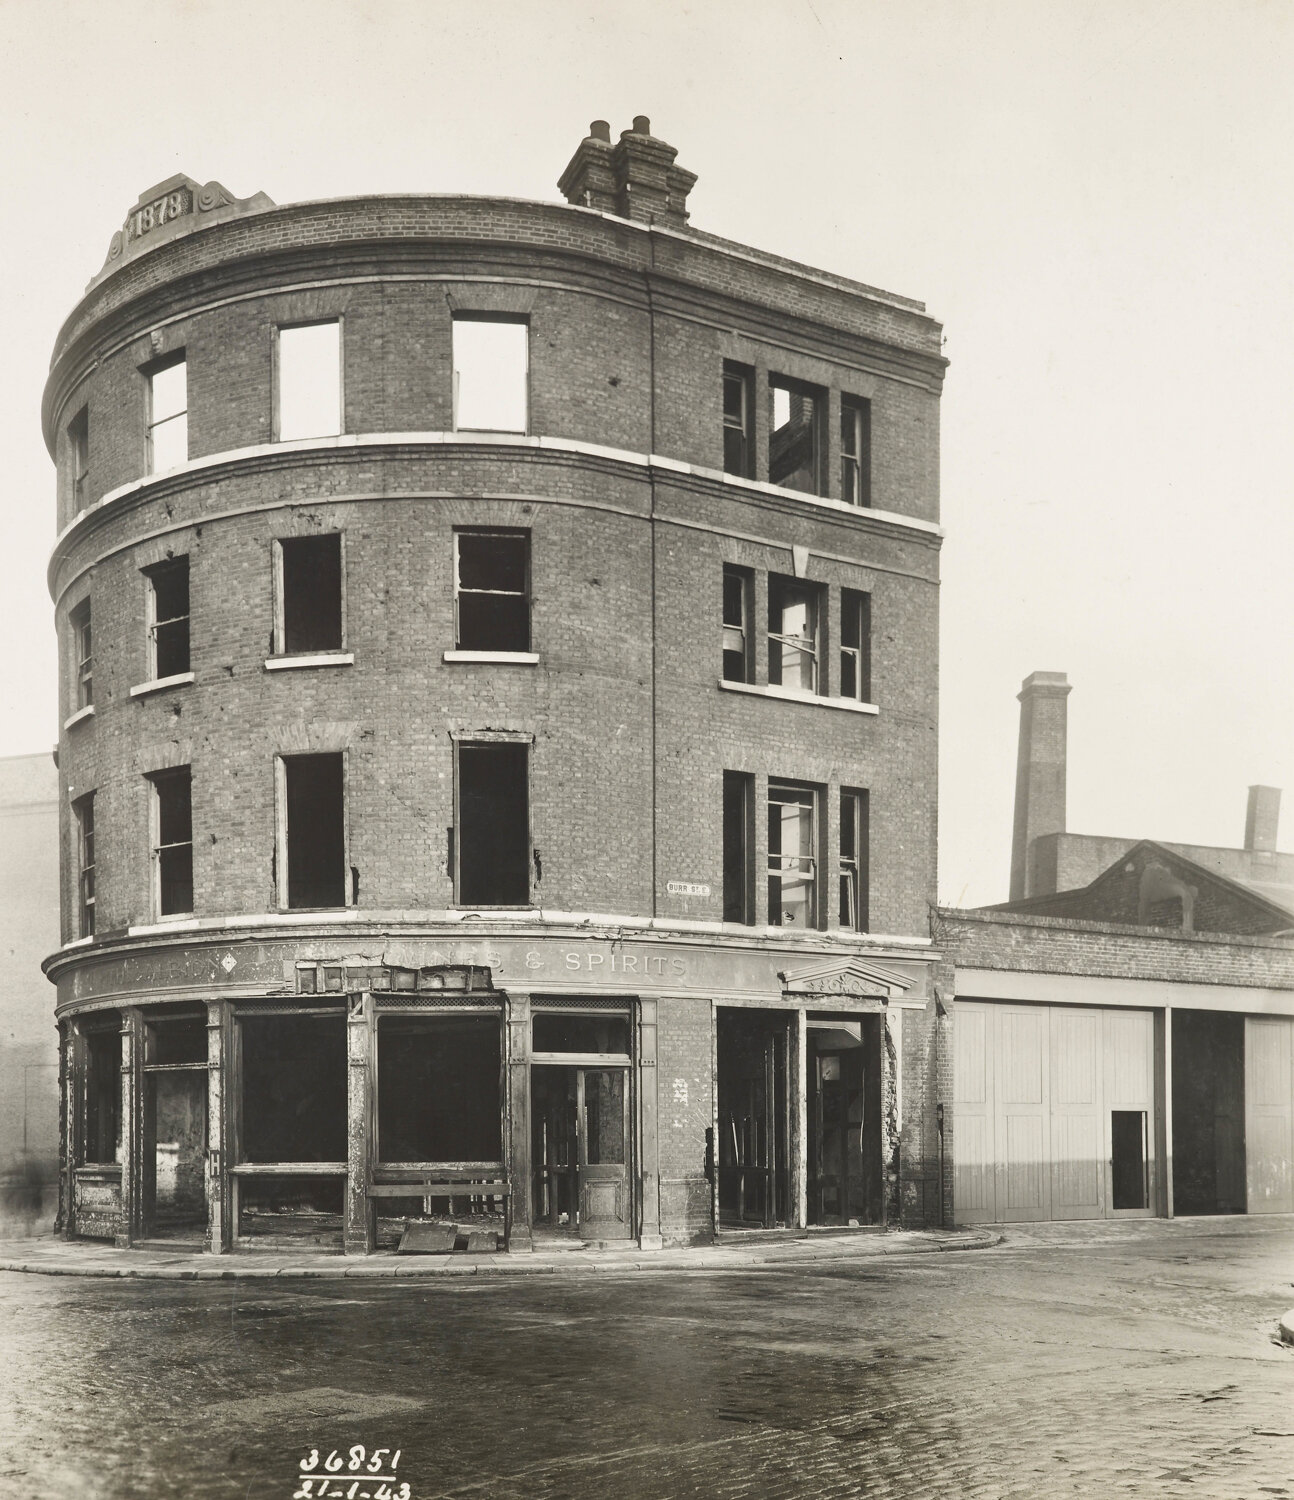 Bomb damage to the Albion pub, January 1943